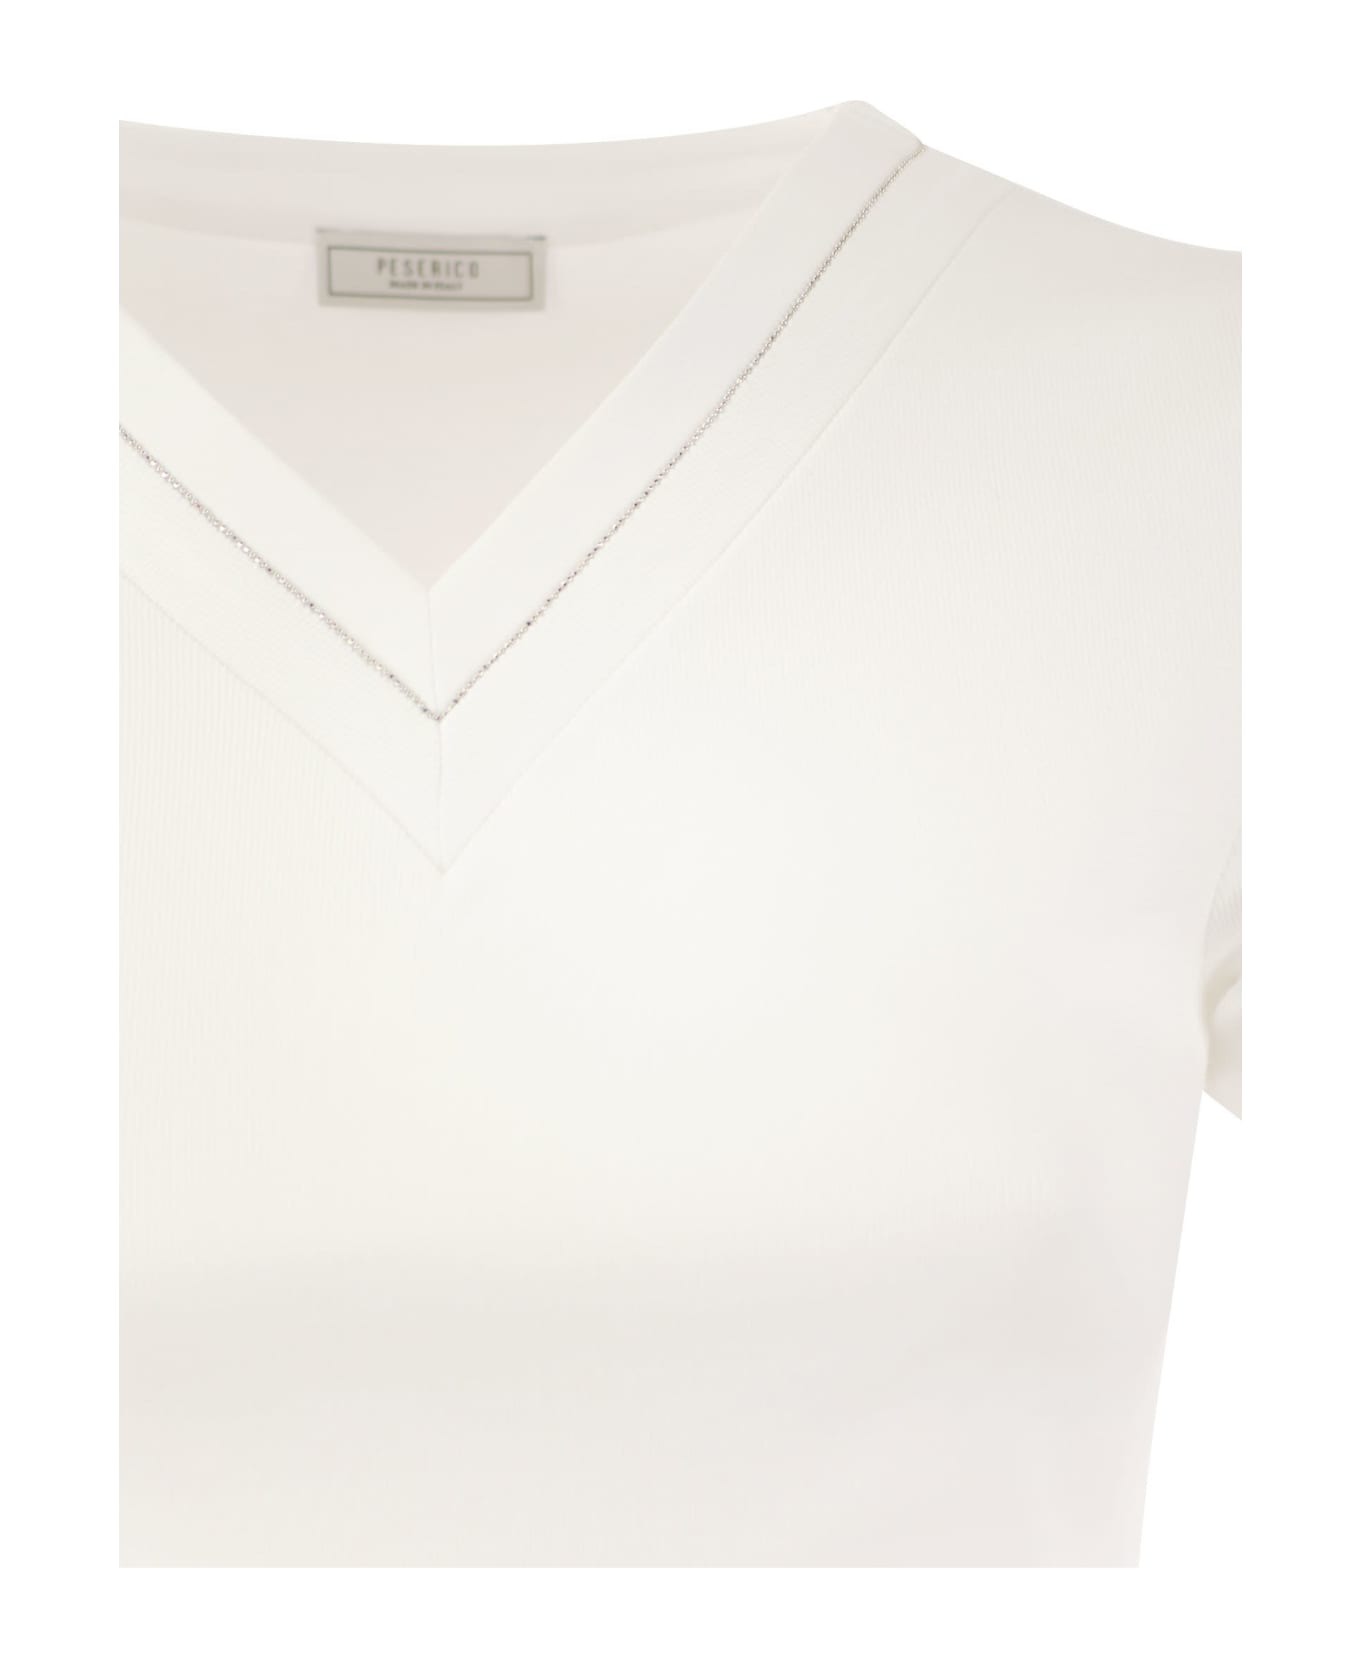 Peserico T-shirt Bianco - White Tシャツ